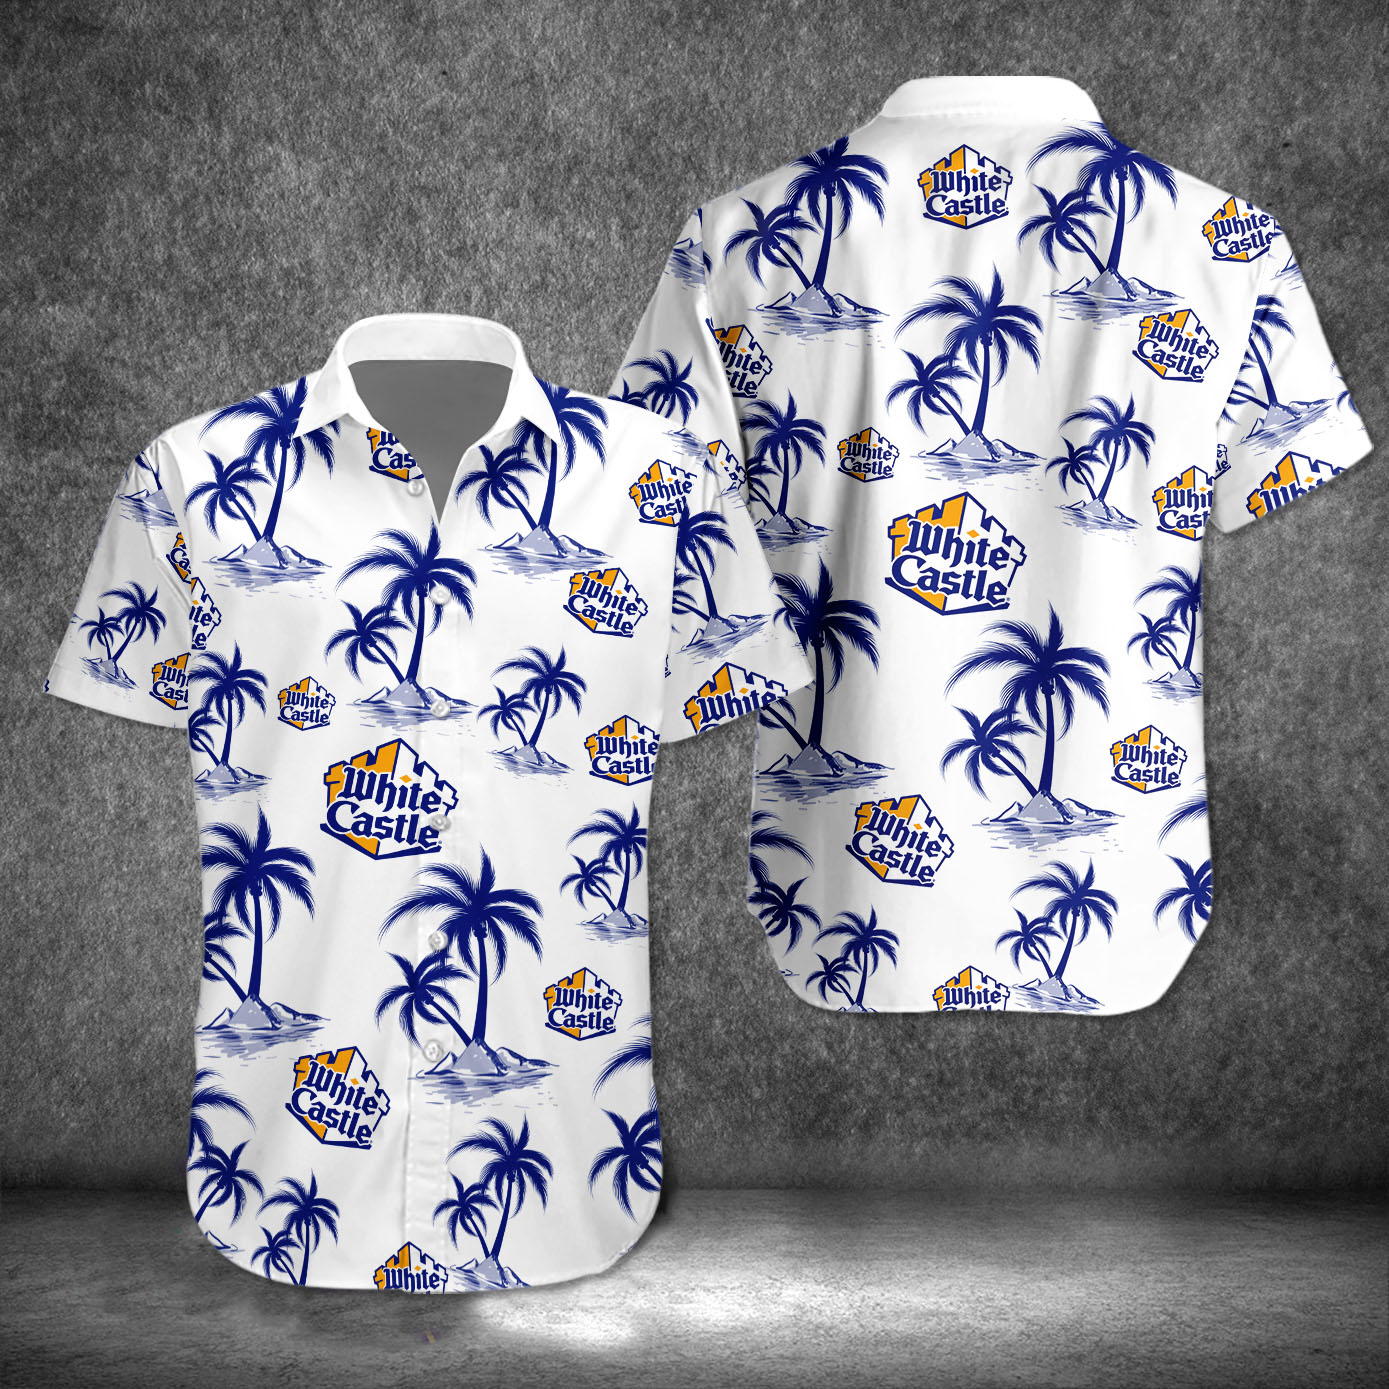 white castle hawaiian shirt 8816 dJP0F